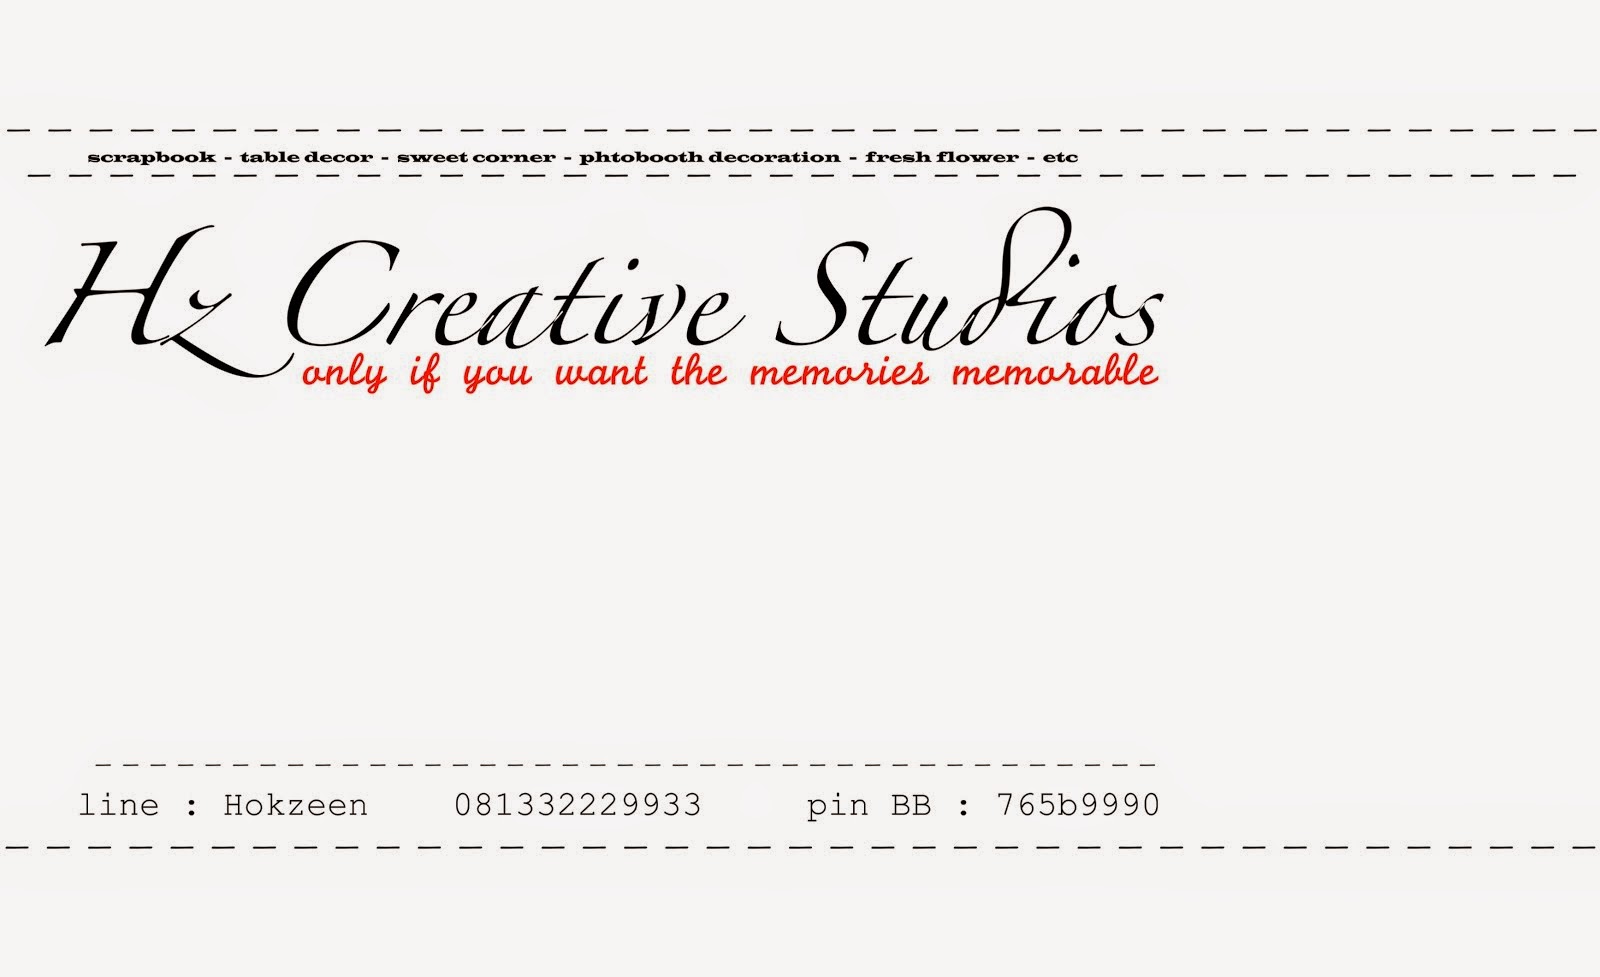 Hz Creative Studios